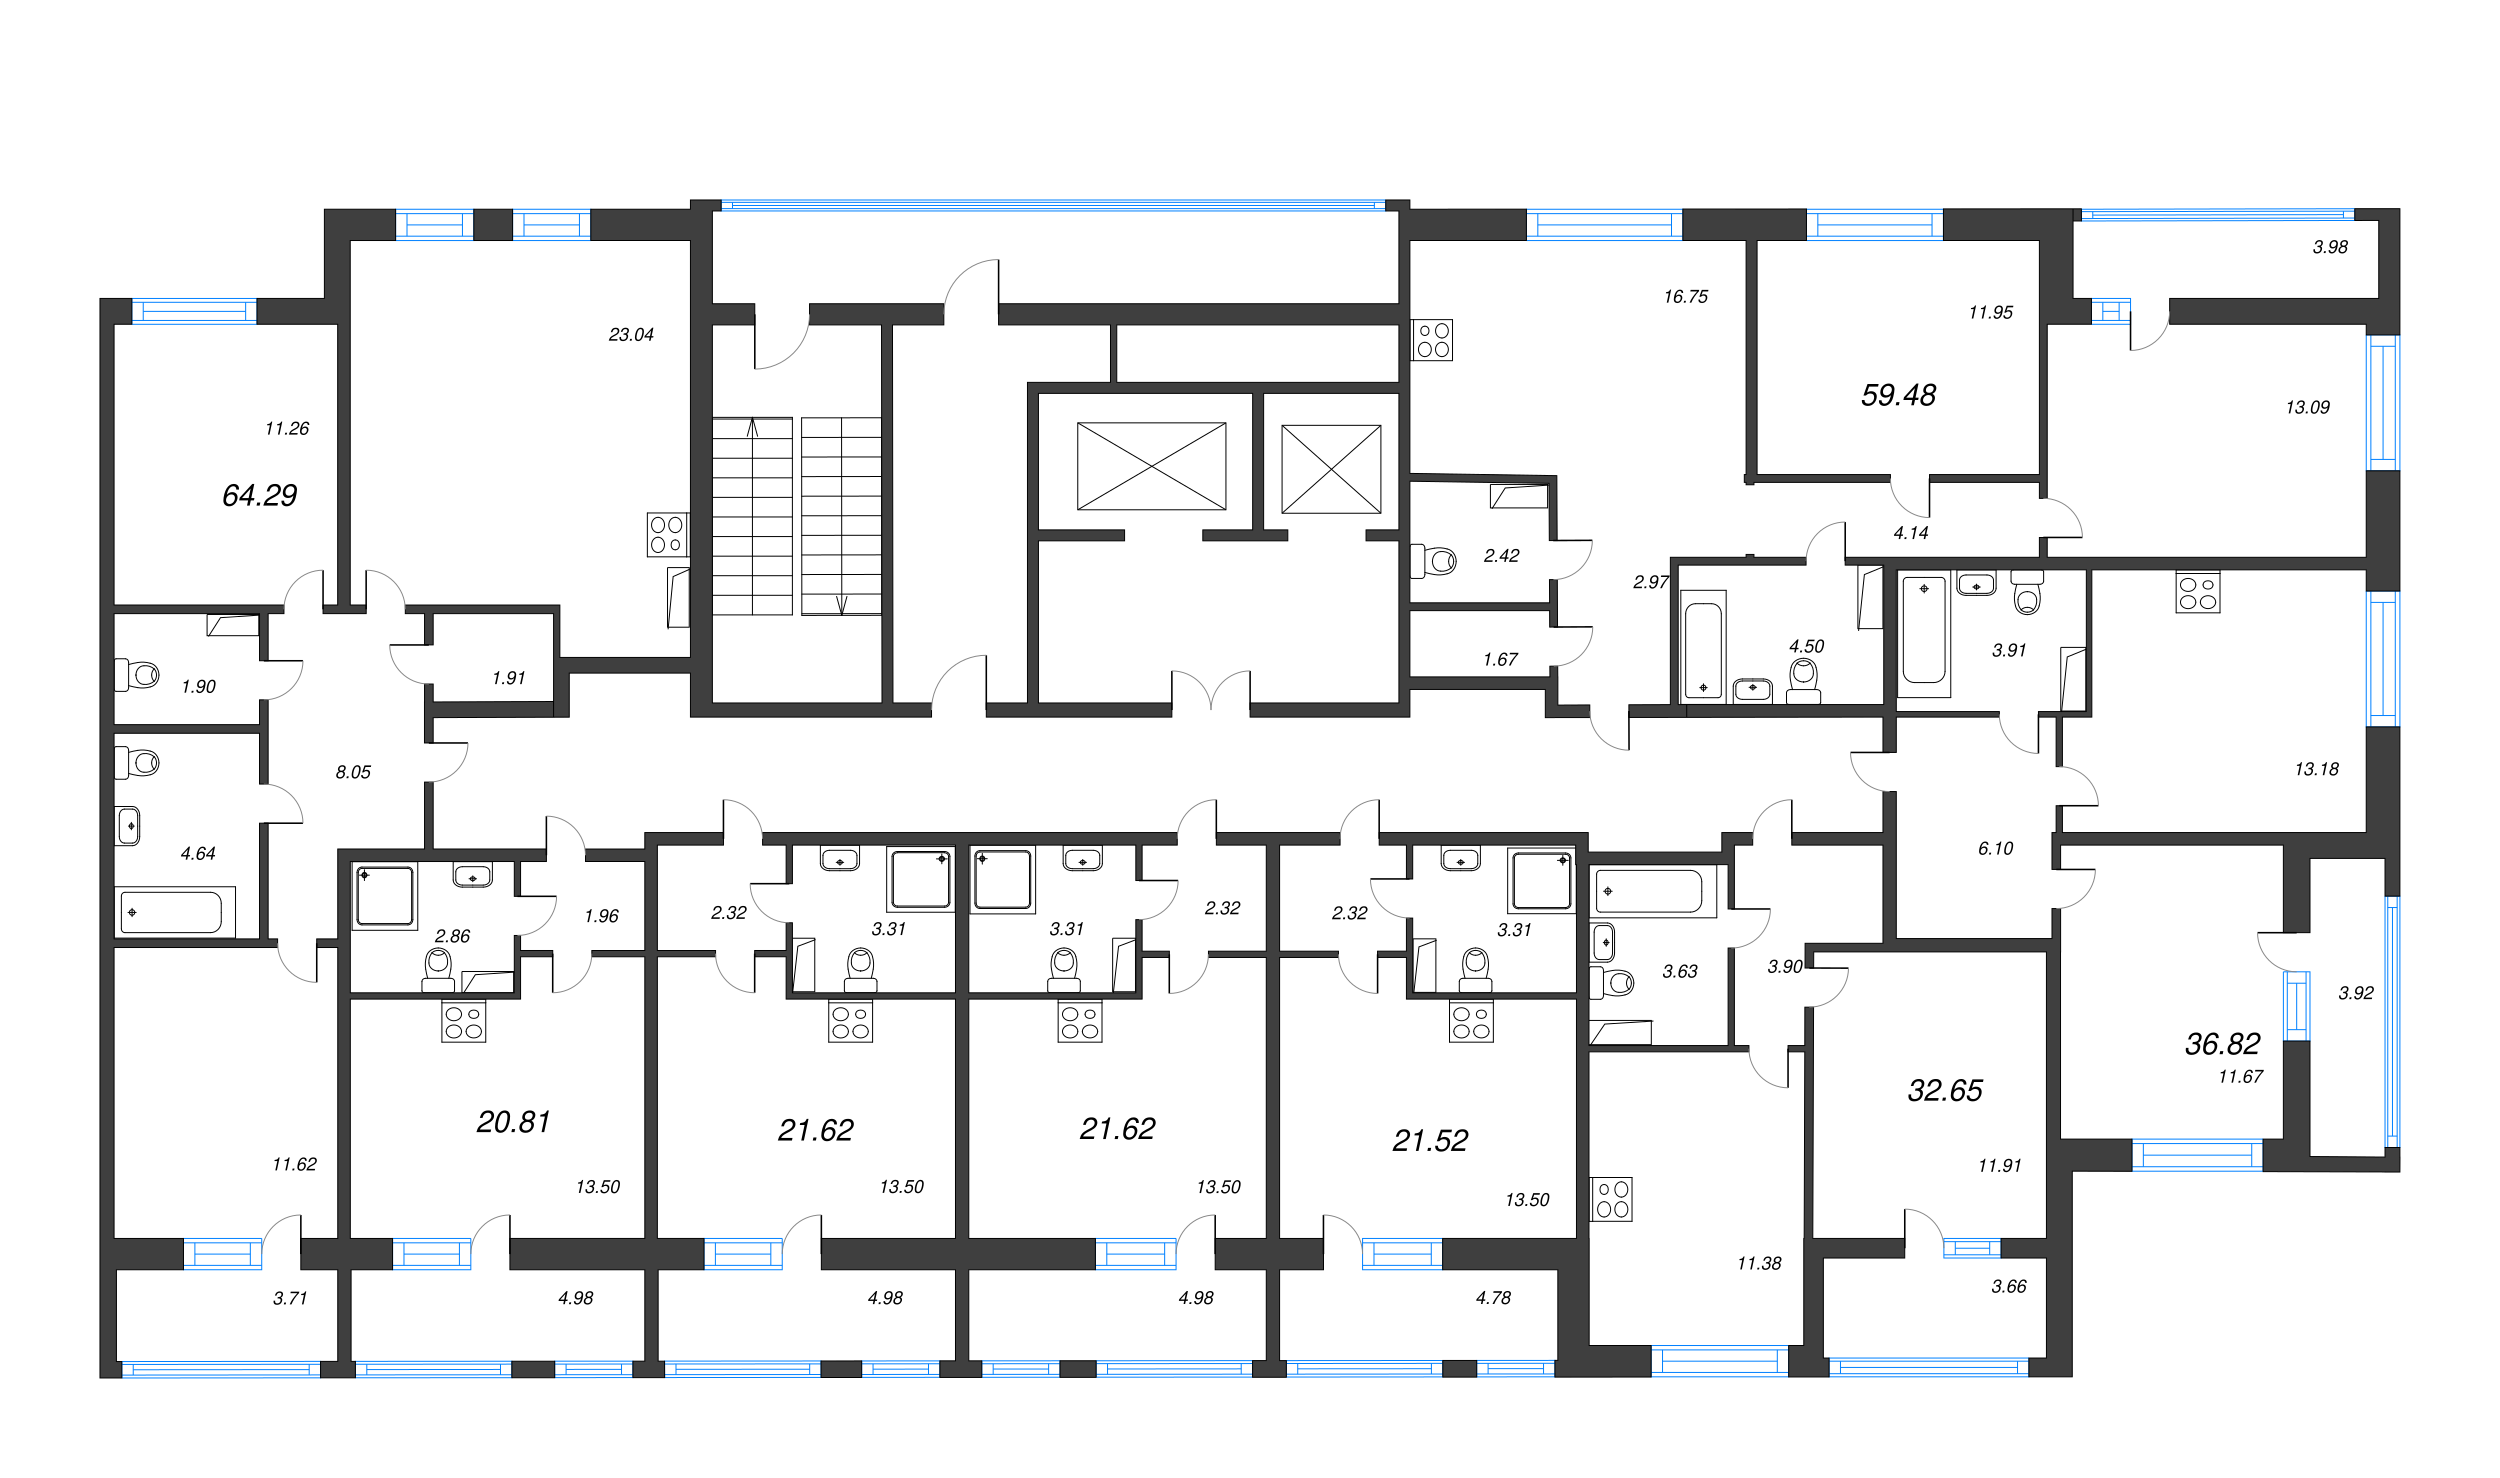 2-комнатная (Евро) квартира, 36.82 м² - планировка этажа